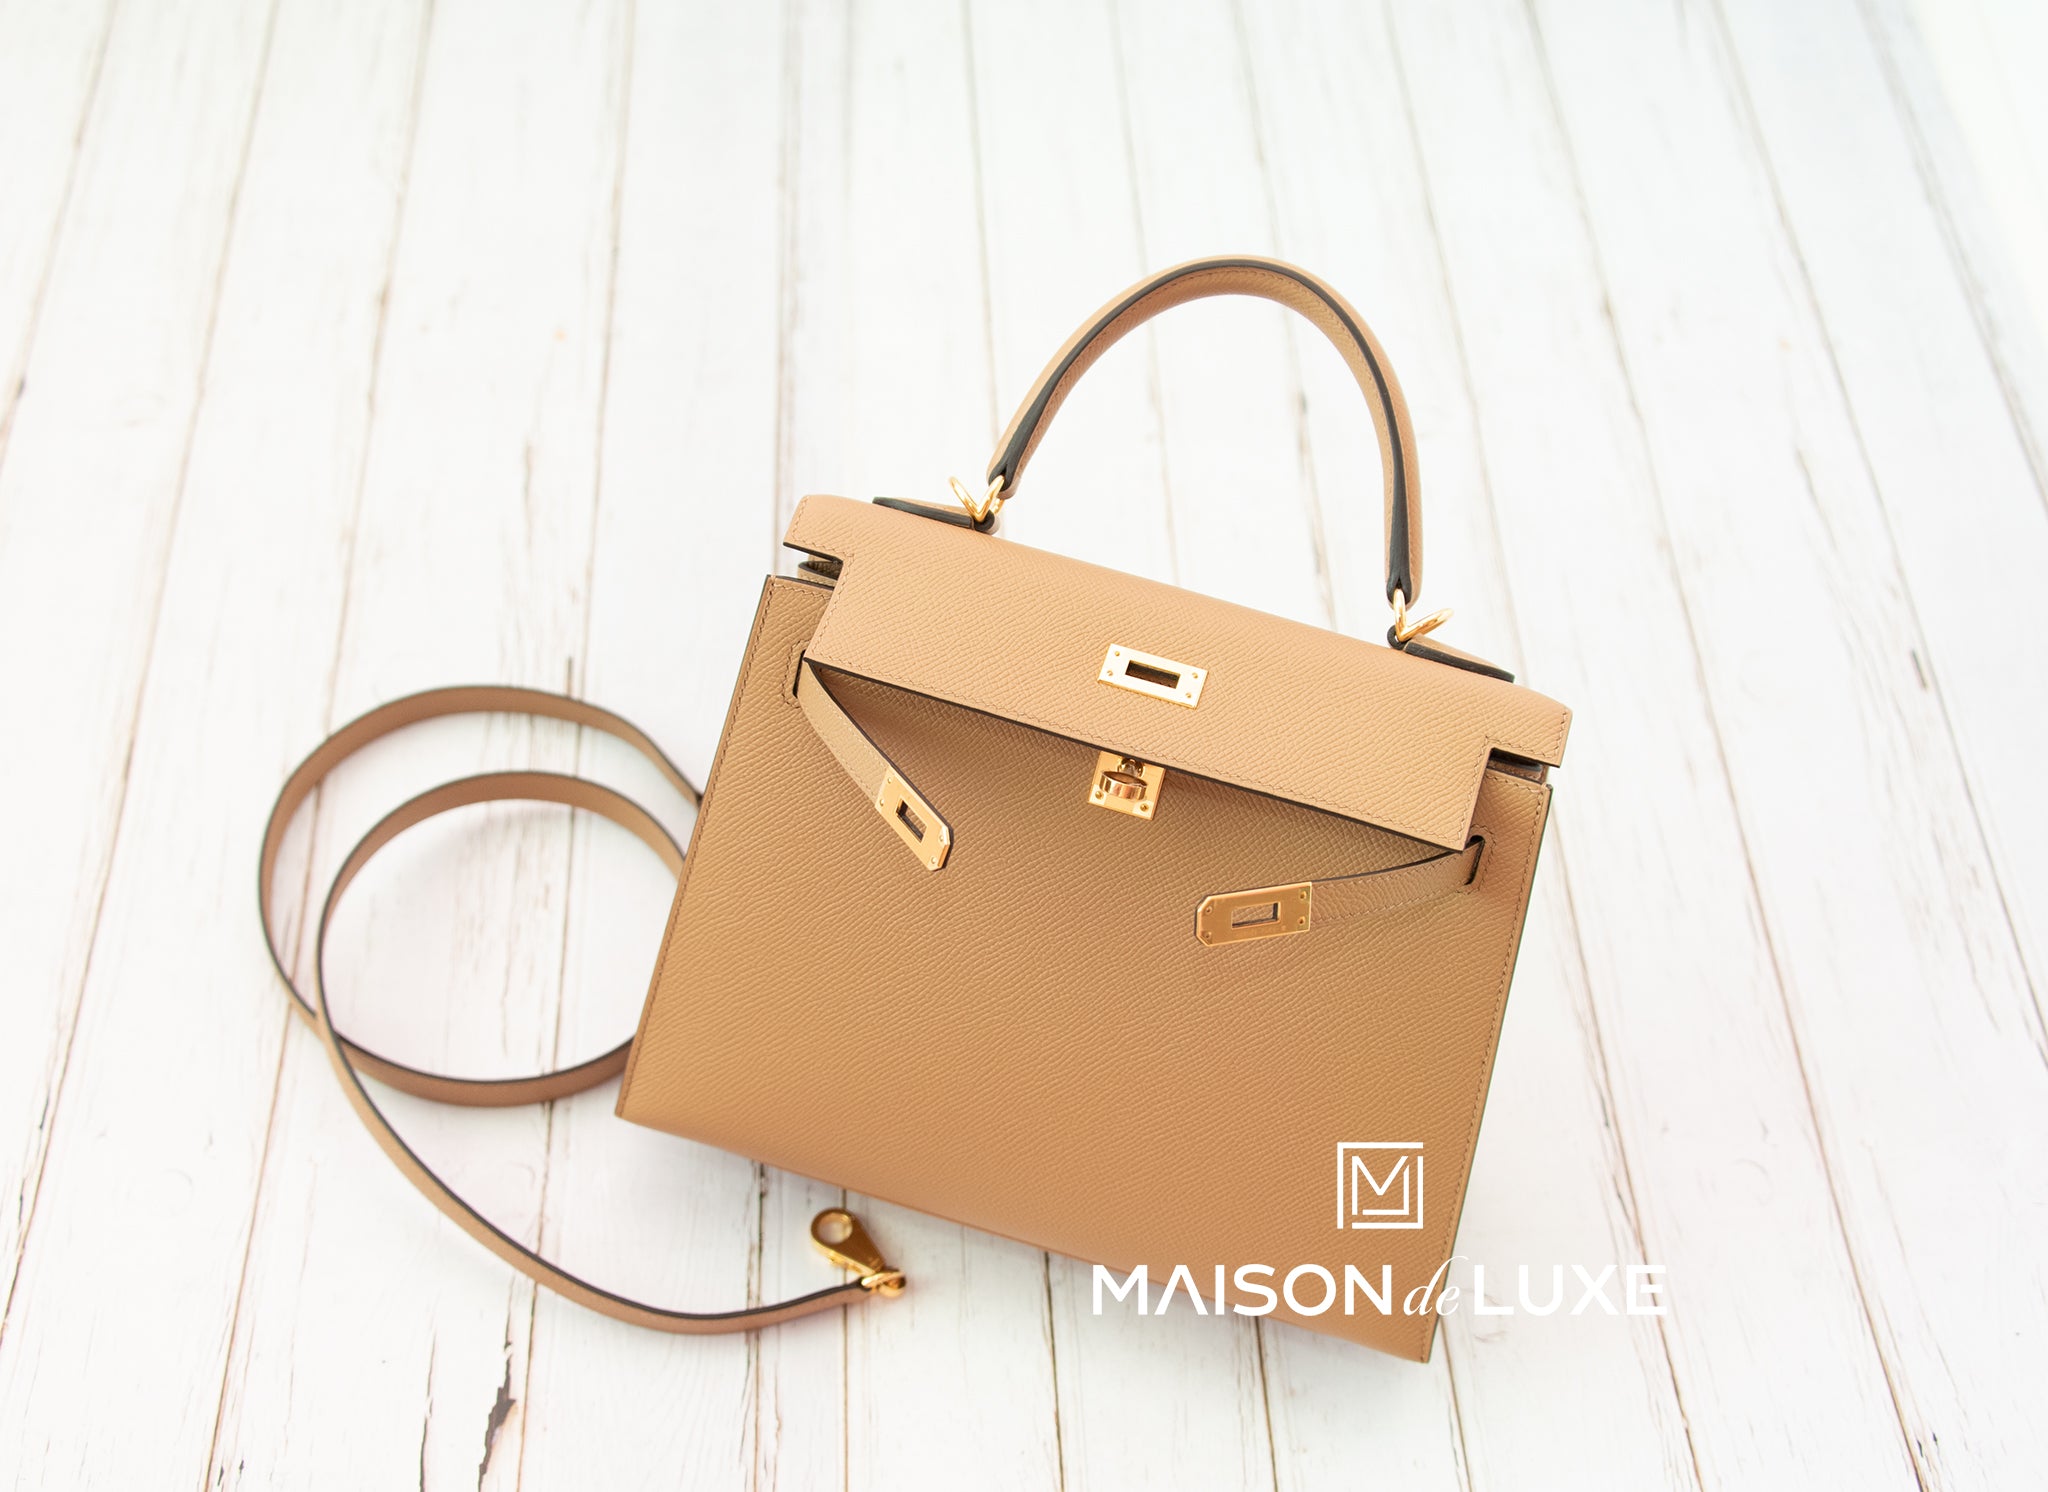 Hermès Kelly 25 Chai Epsom With Gold Hardware - AG Concierge Fzco